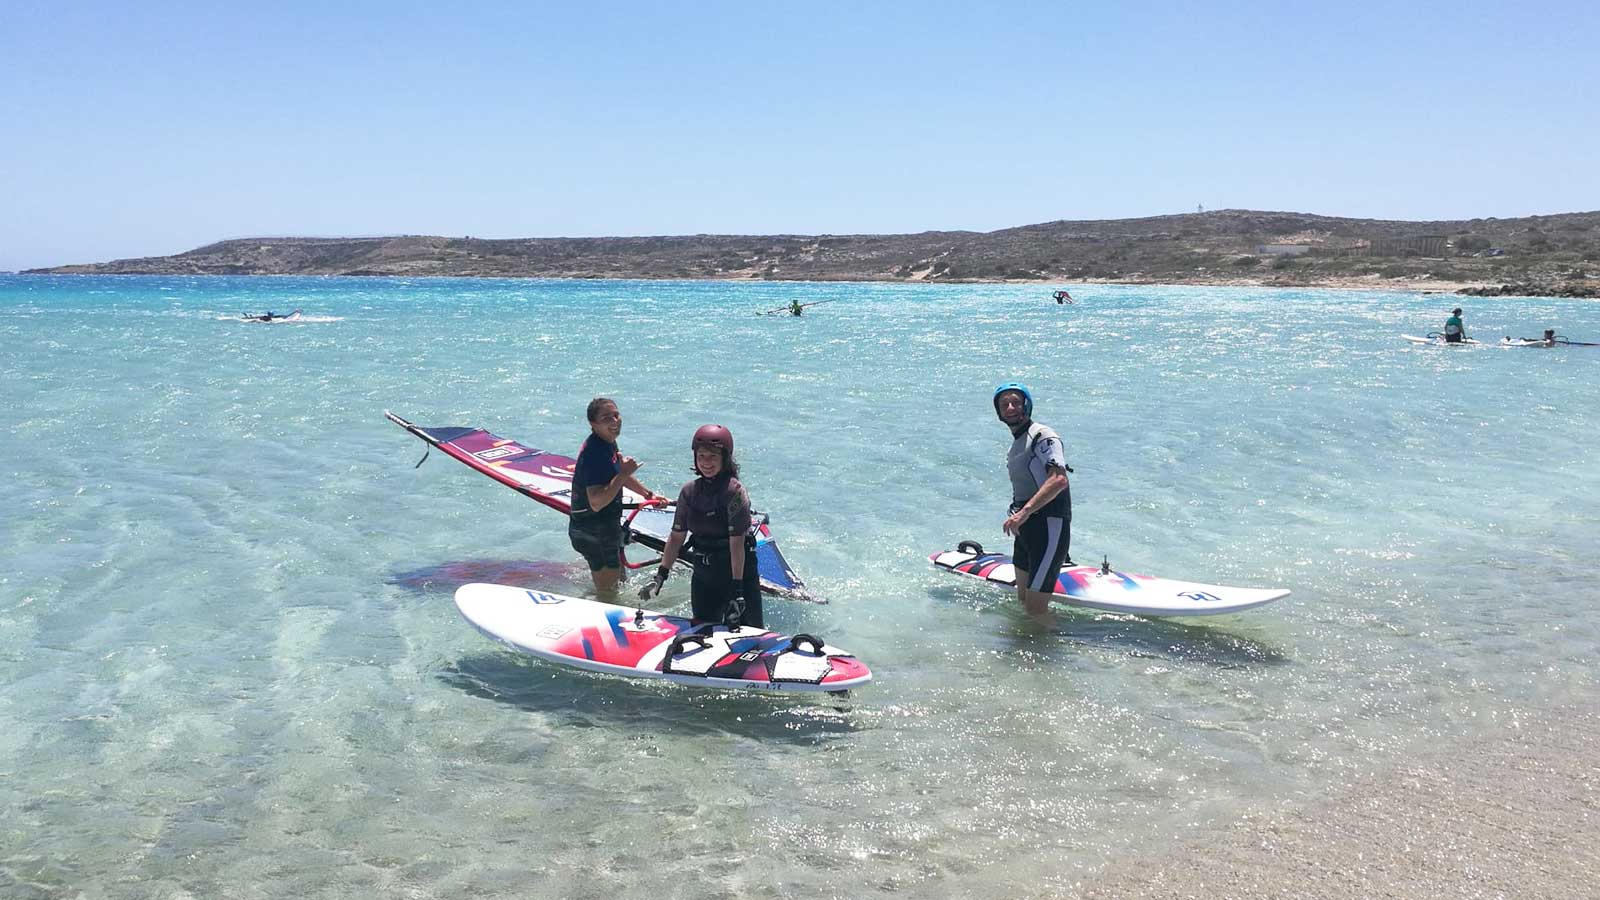 Ion club Karpathos windsurf lessons starting in chicken bay spot